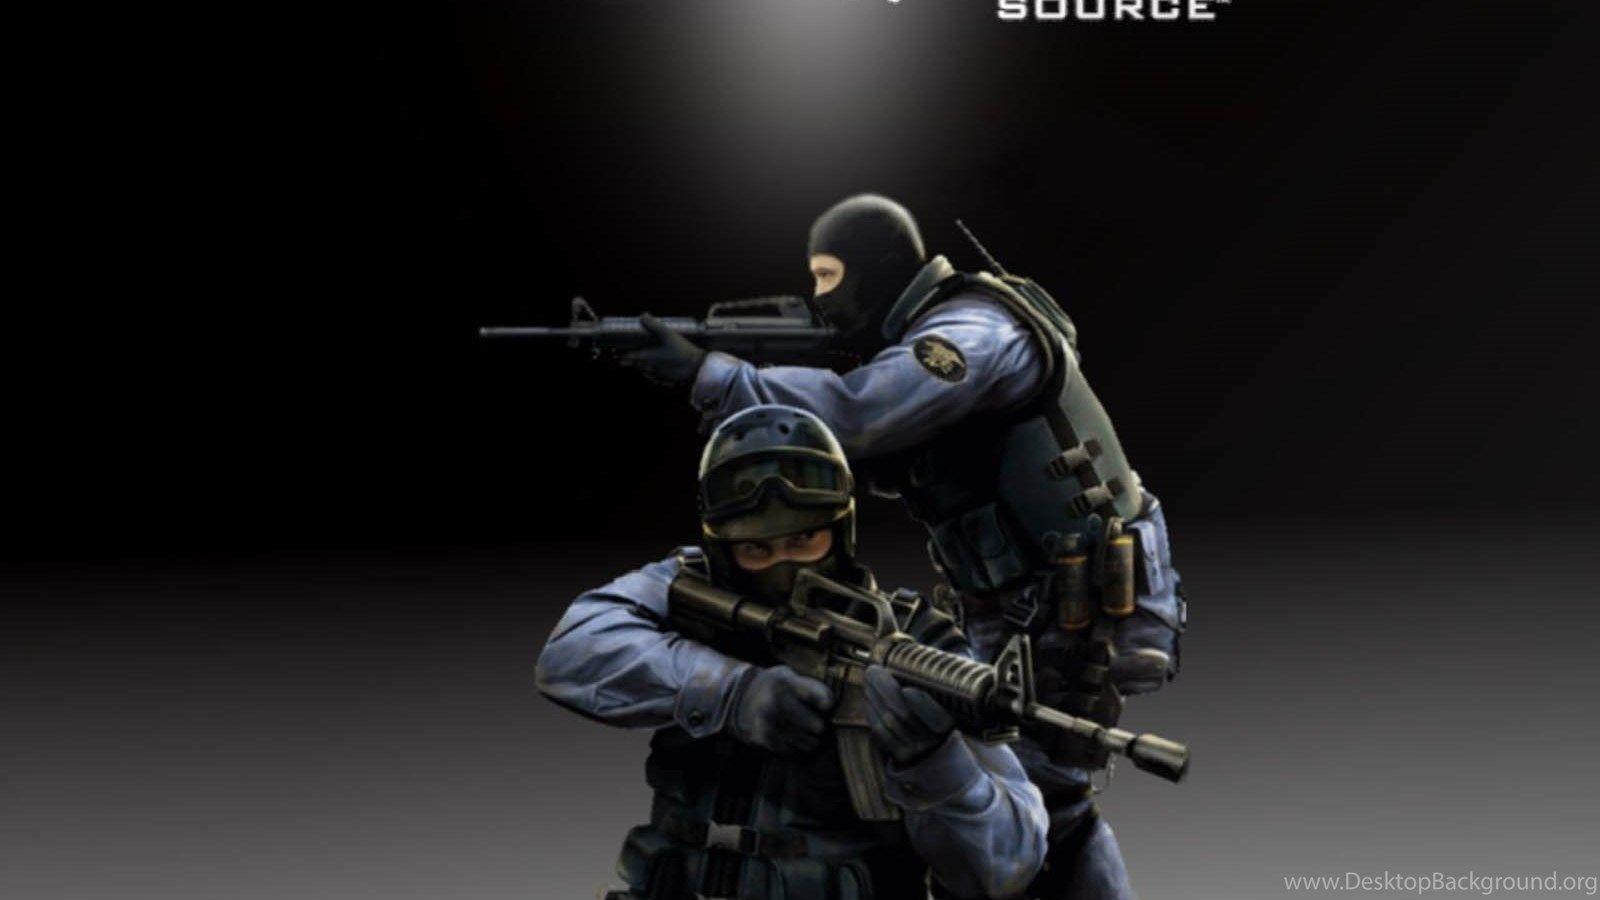 Wallpaper: Counter Strike Source Game Wallpaper Desktop Background